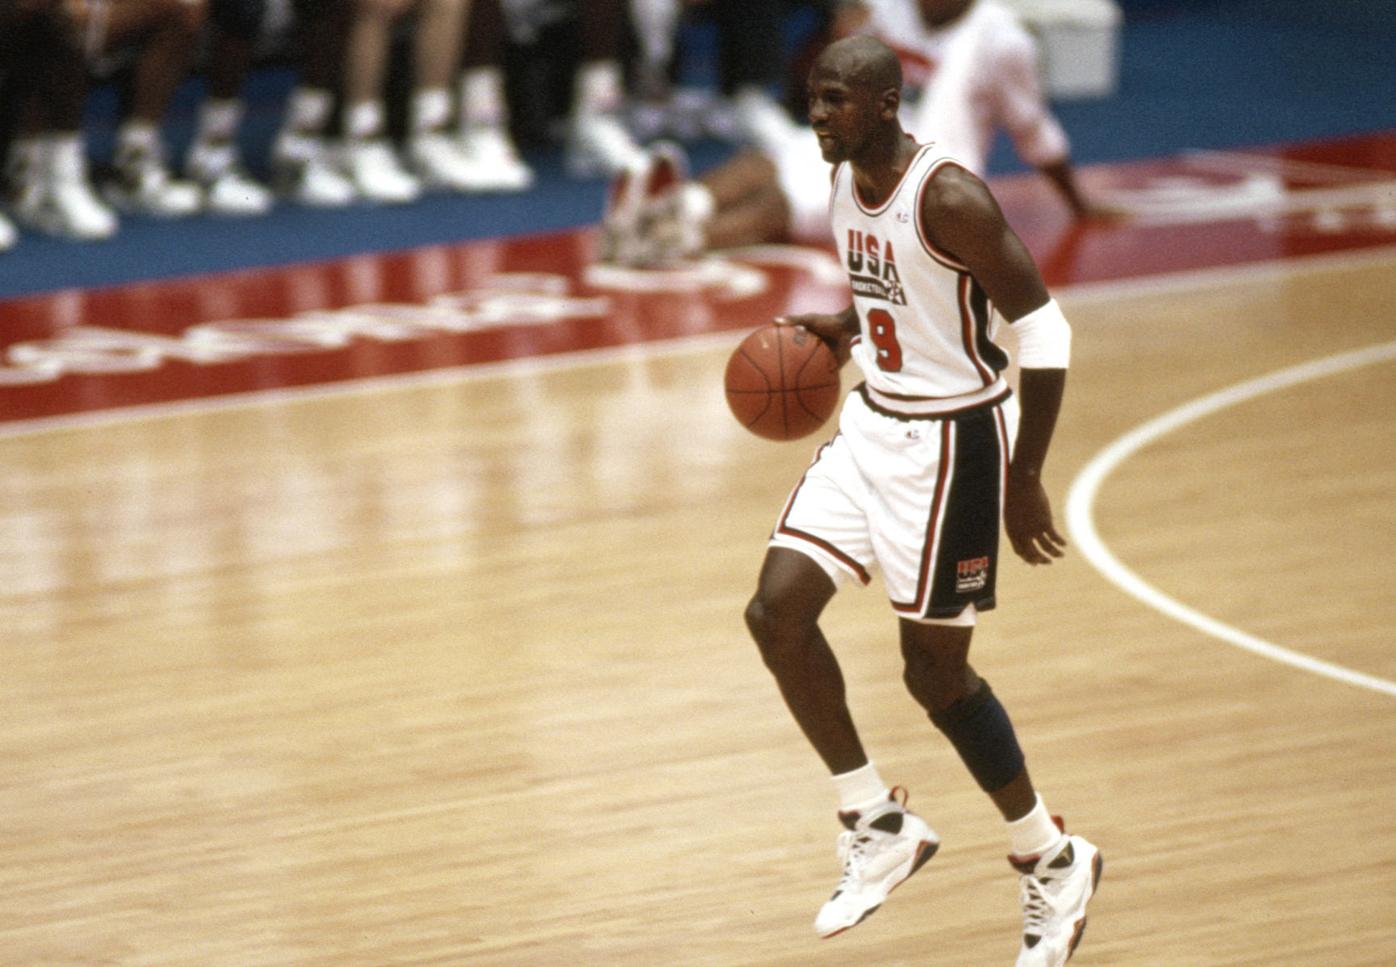 Michael Jordan's game-worn 1992 Dream Team jersey sells for $216K